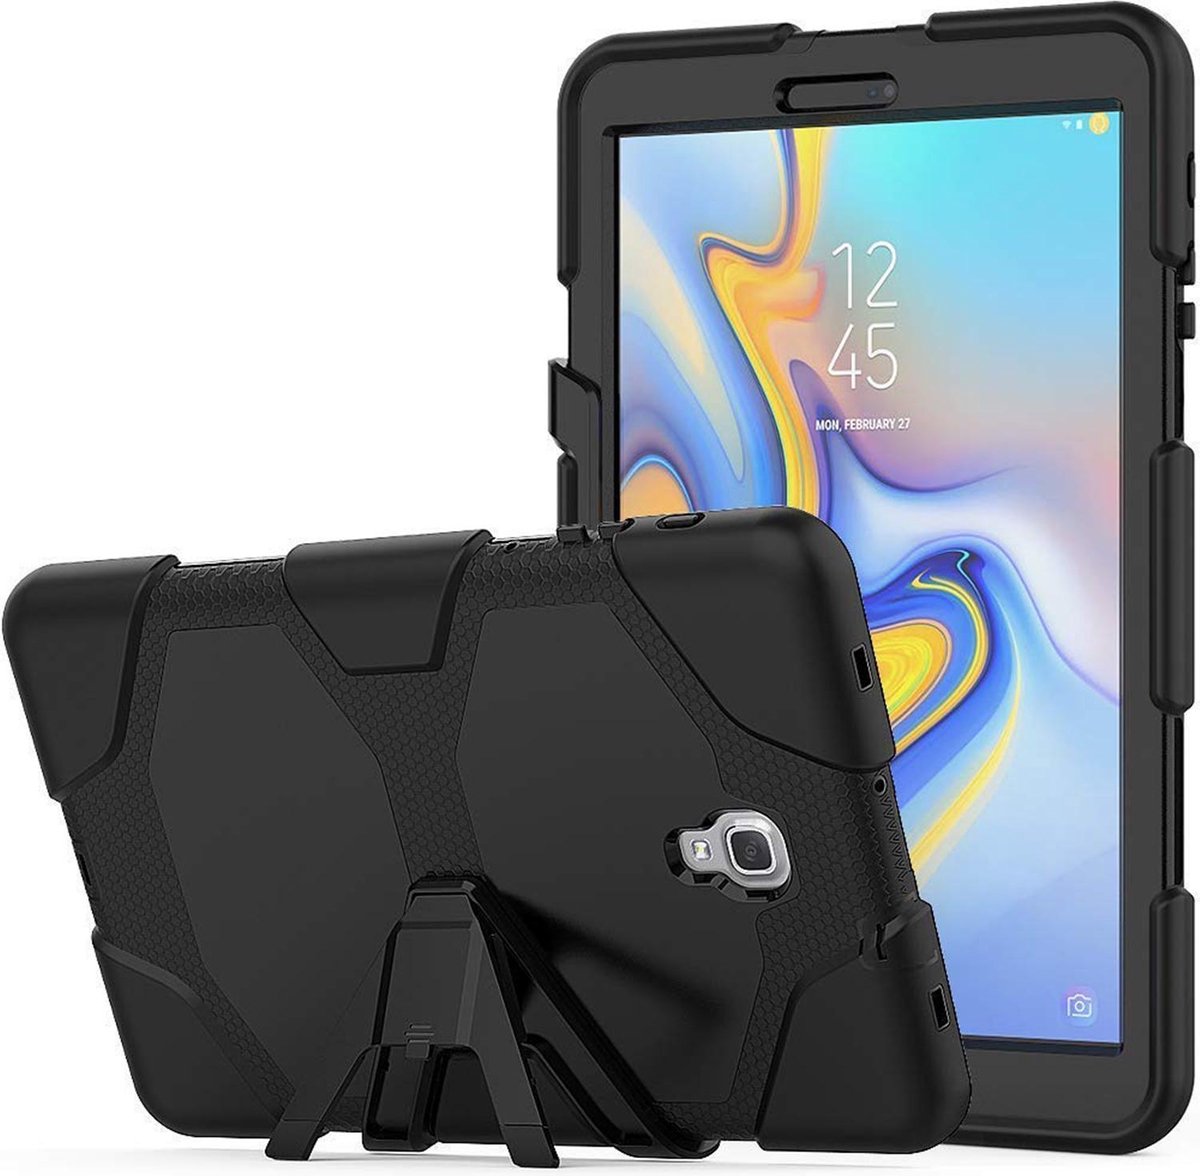 Hoes geschikt voor Samsung Galaxy Tab A 10.5 2018 - Ingebouwde Screenprotector - Robuuste Armor Case Hoes